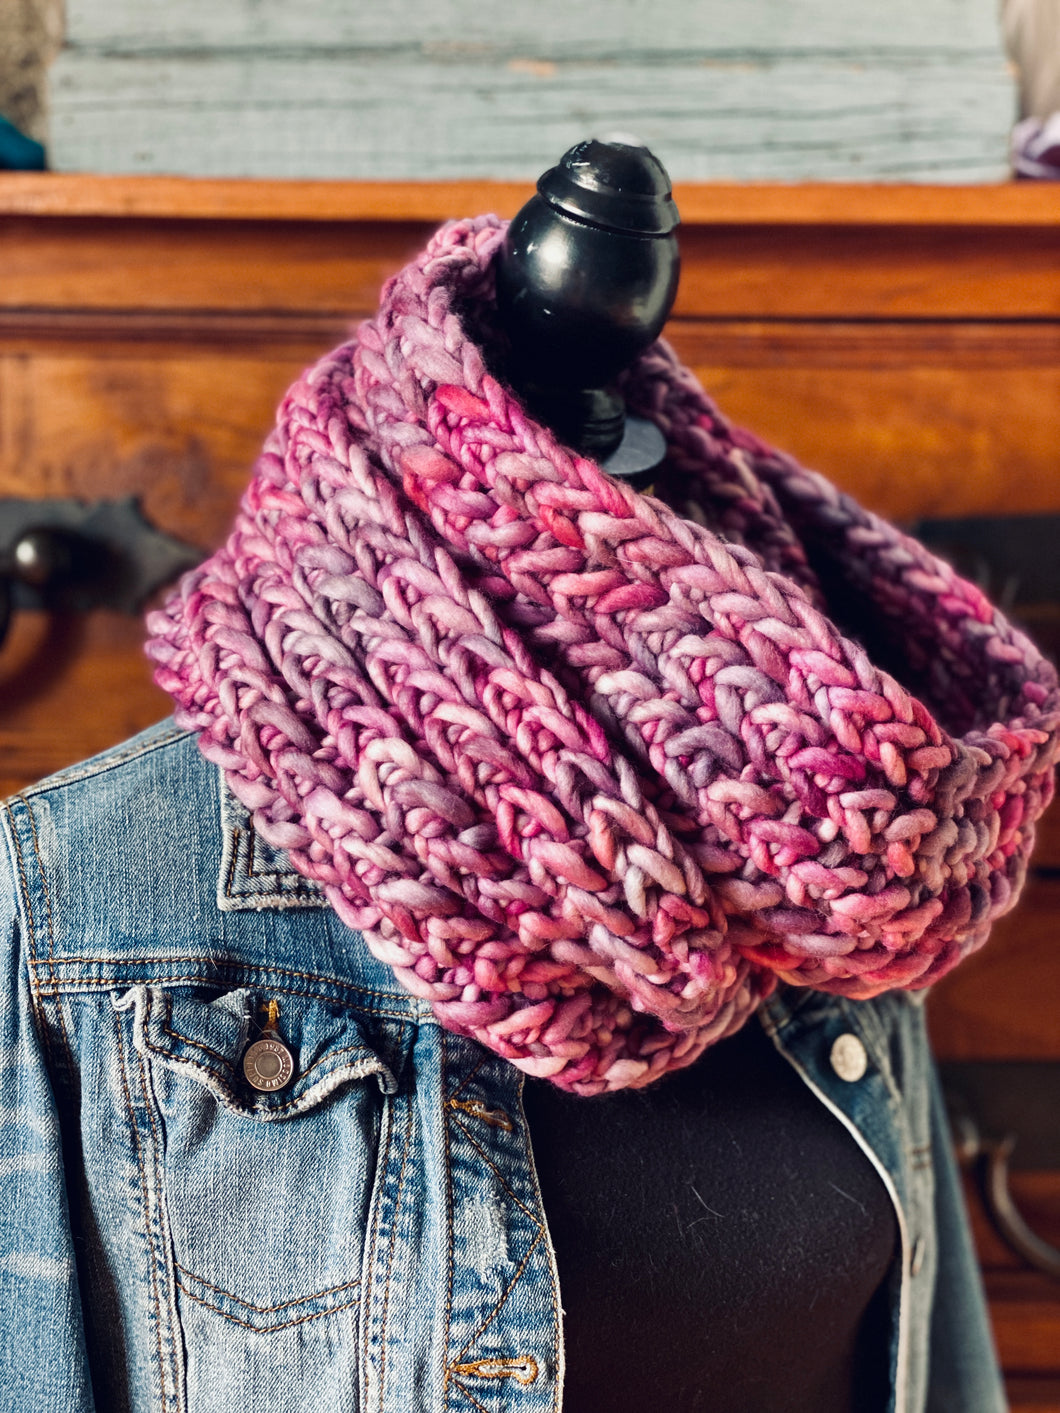 Luxury women's hand knit high fashion winter infinity cowl cozy wool slow fashion gift pink purple valentine